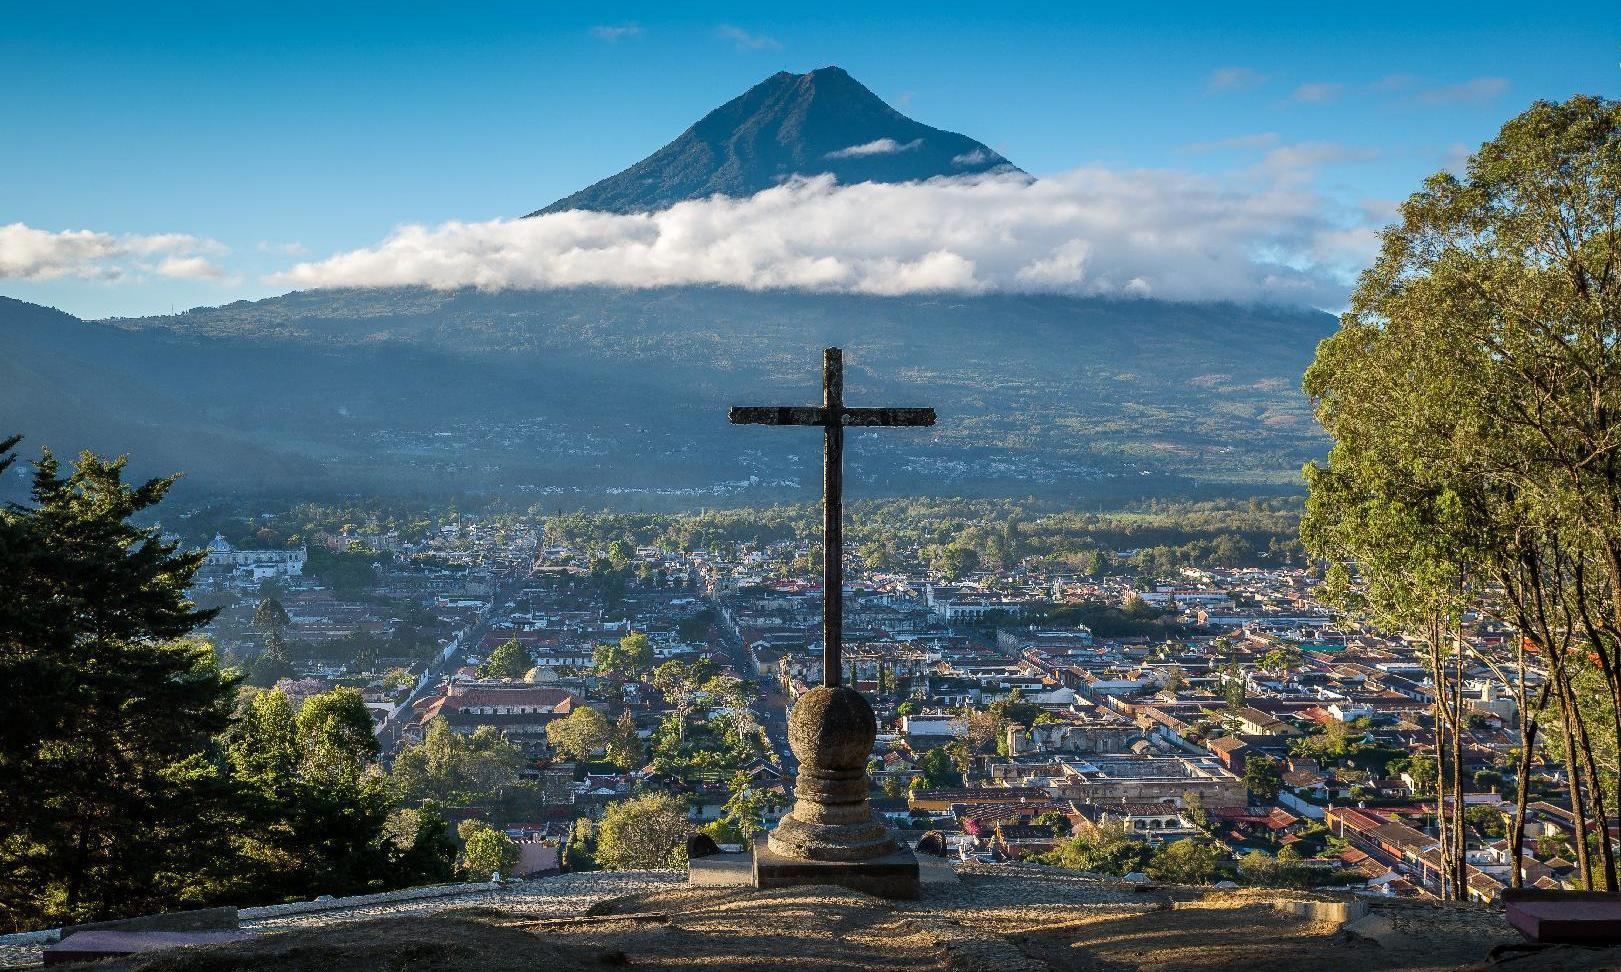 My trip to Guatemala